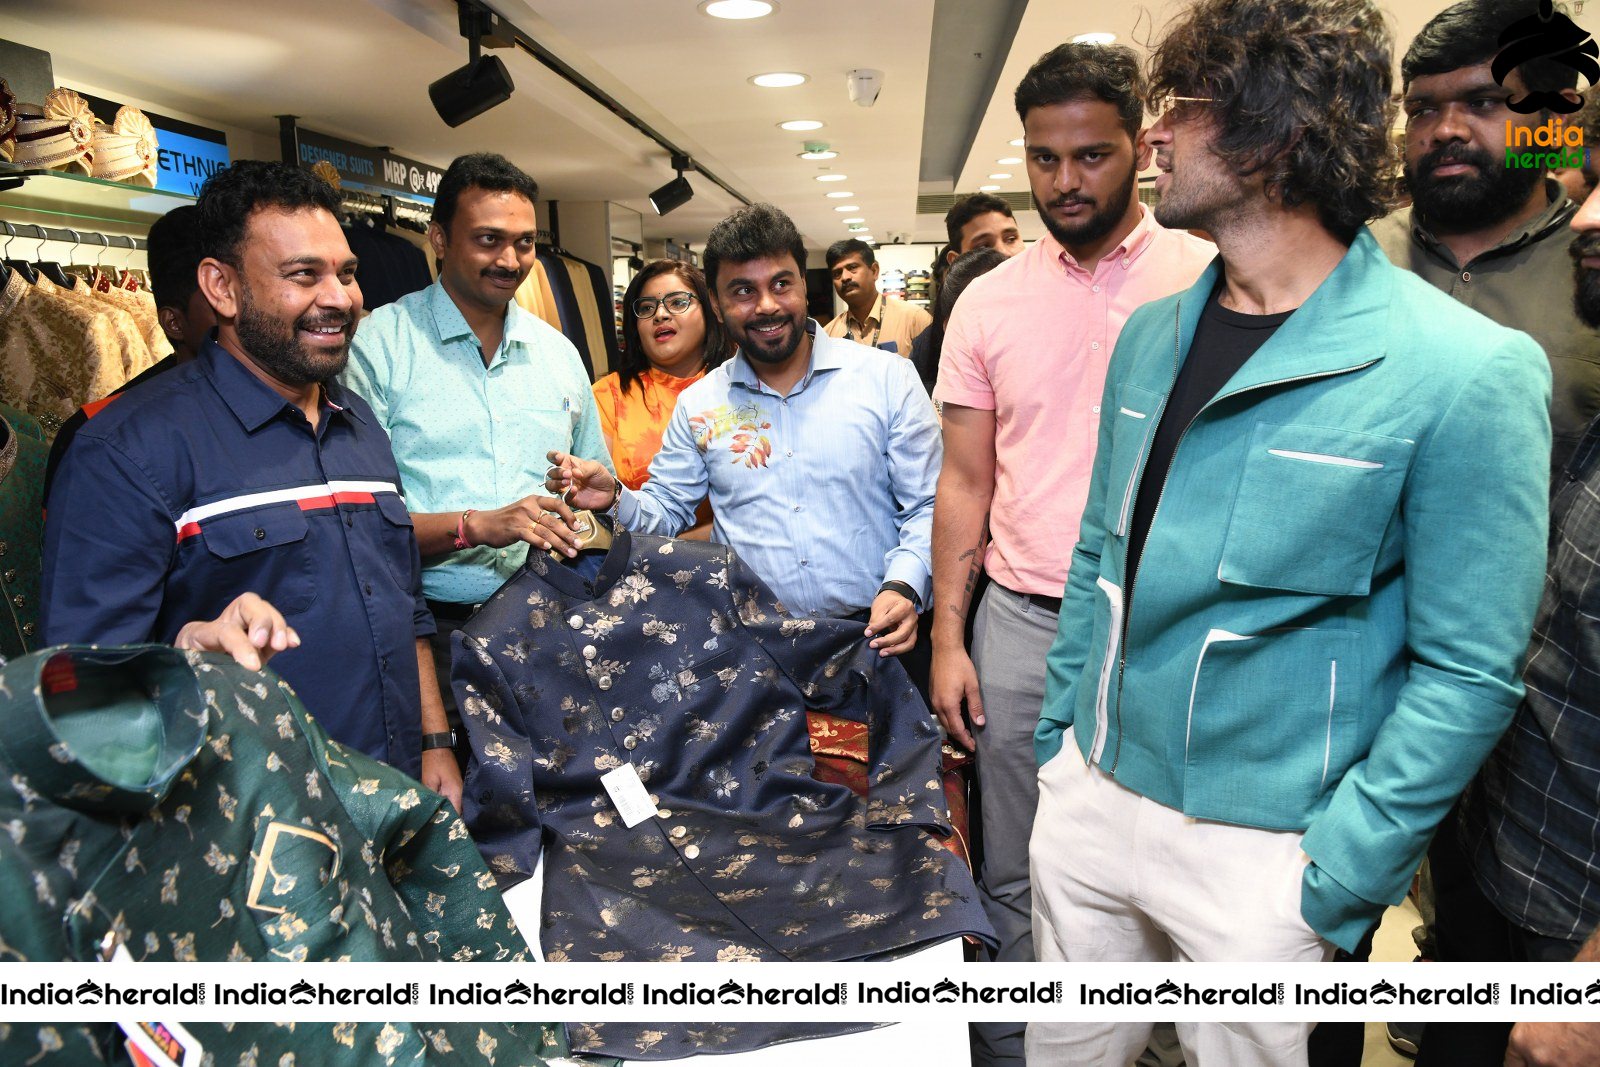 Vijay Devarakonda Launch KLM Shopping Mall Set 3